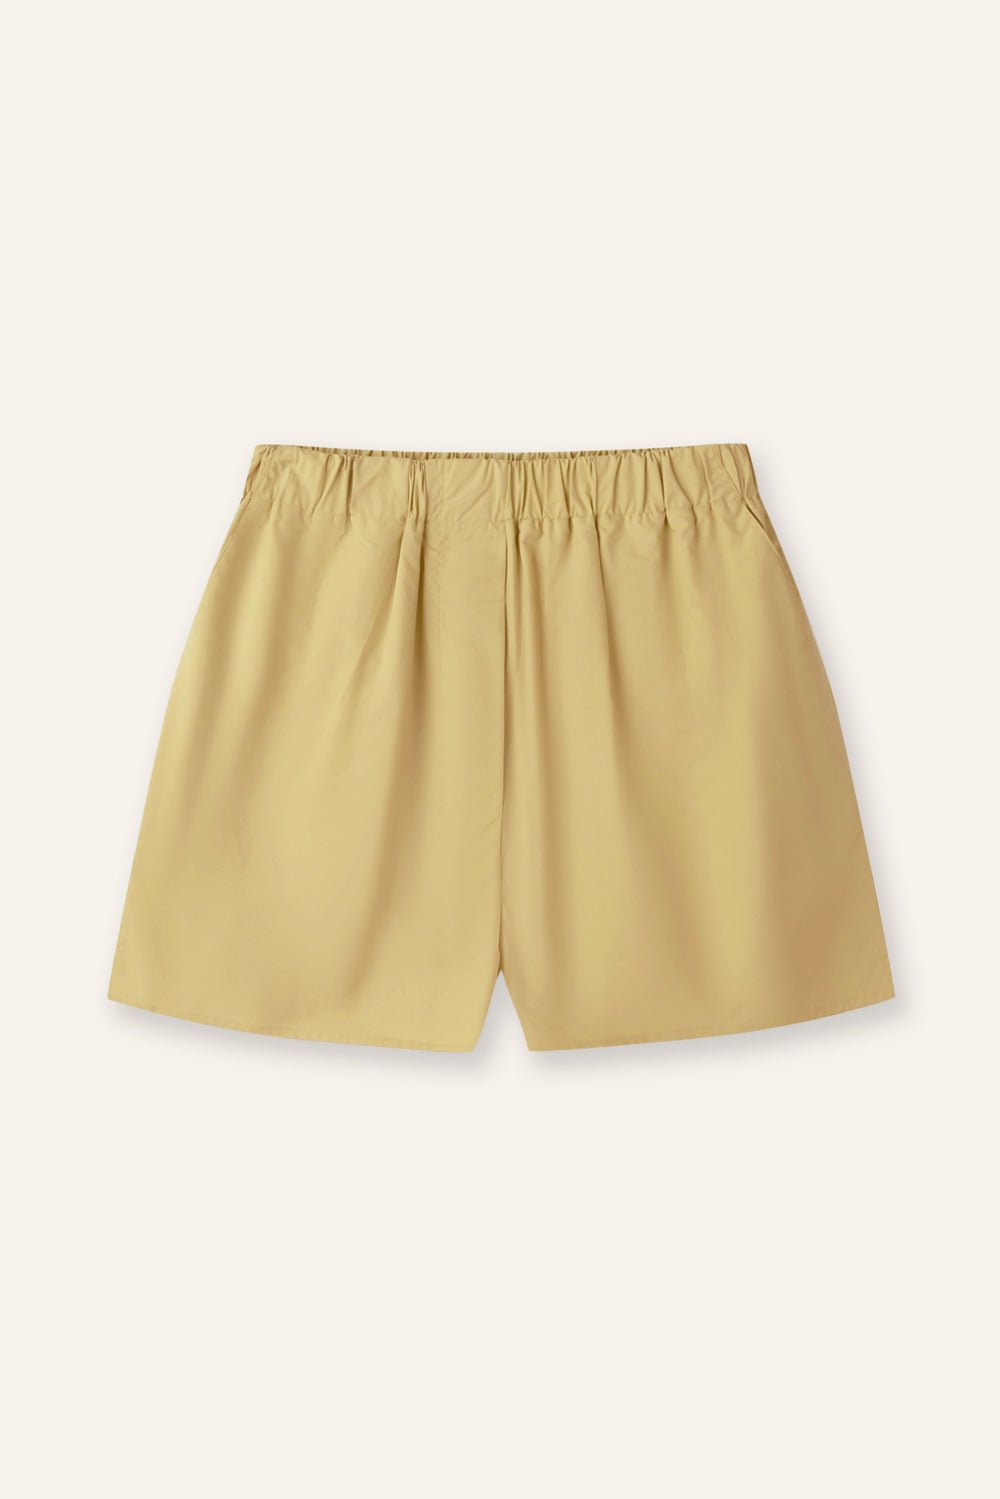 LUI cotton shorts (Light yellow) - STELLAM